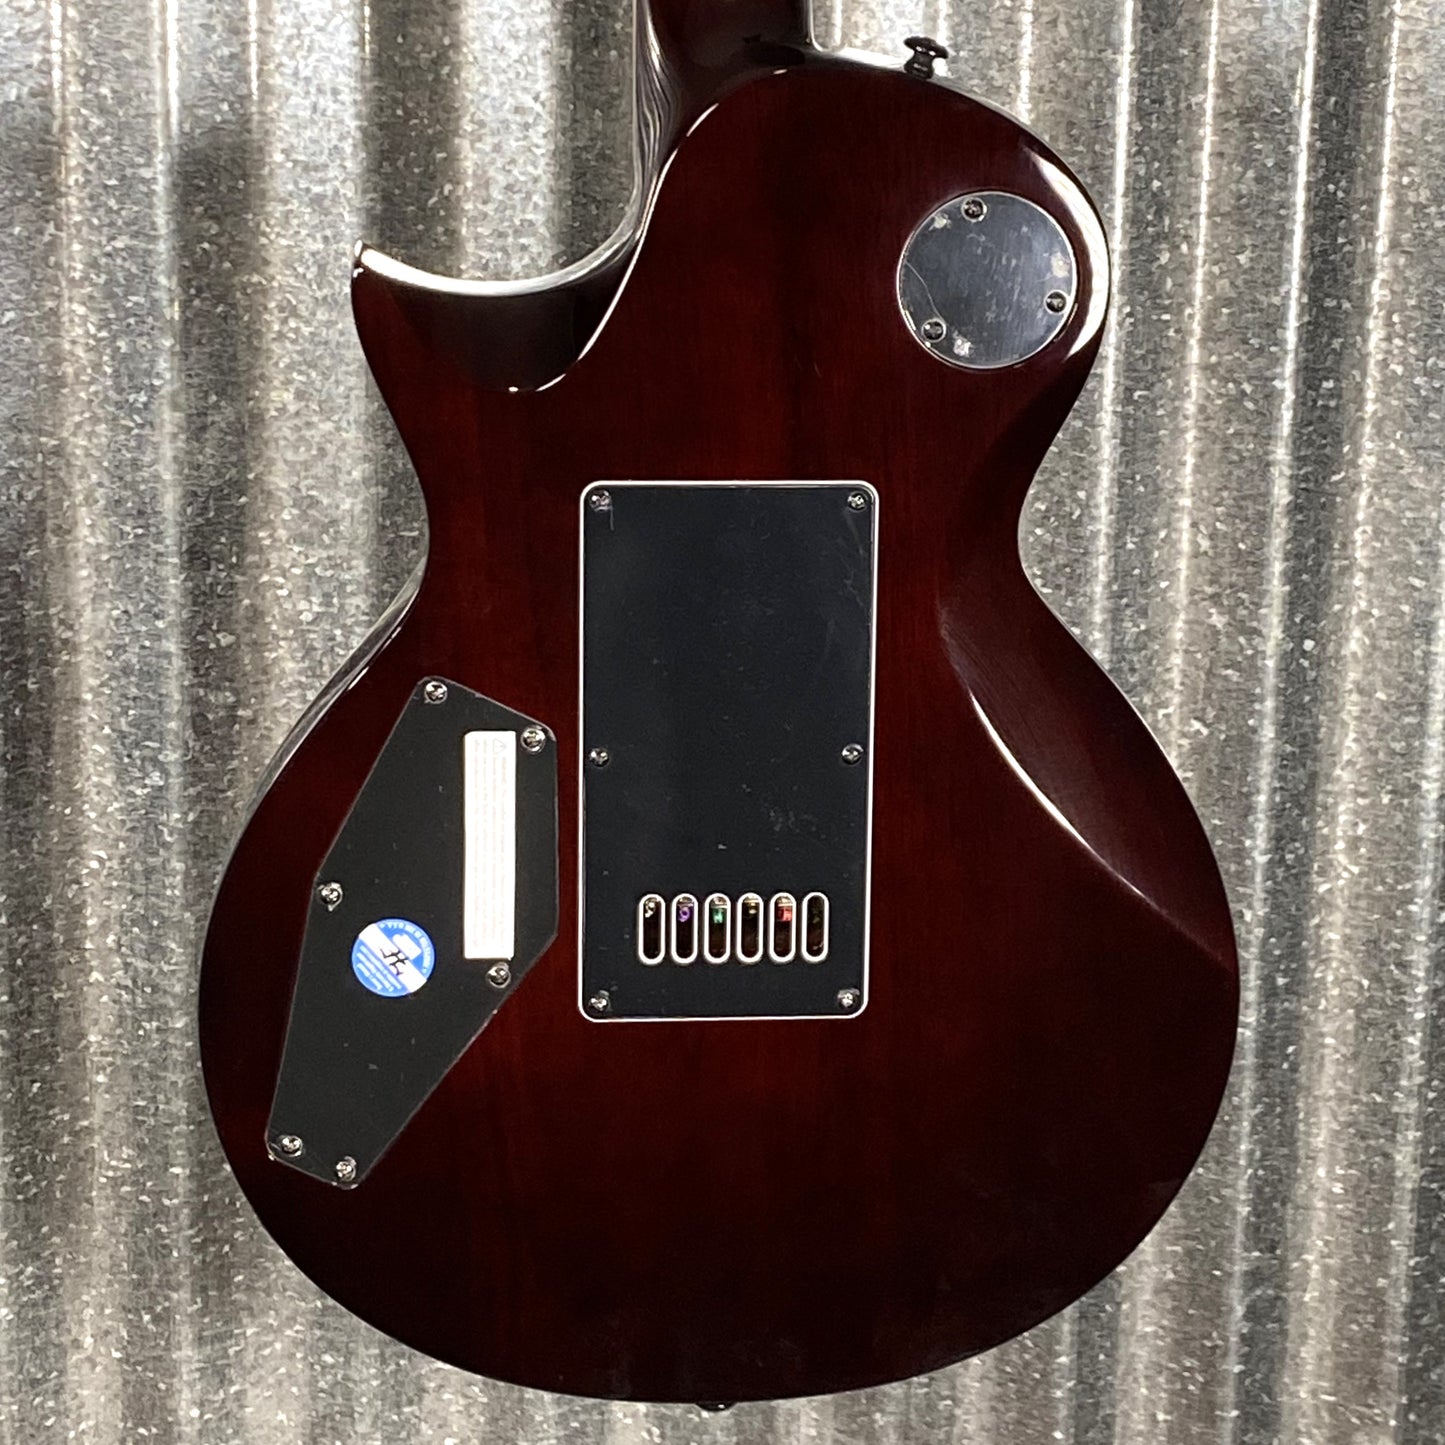 ESP LTD EC-1000 Evertune Bridge Dark Brown Sunburst Guitar & Bag EC1000ETQMDBSB #2618 Used